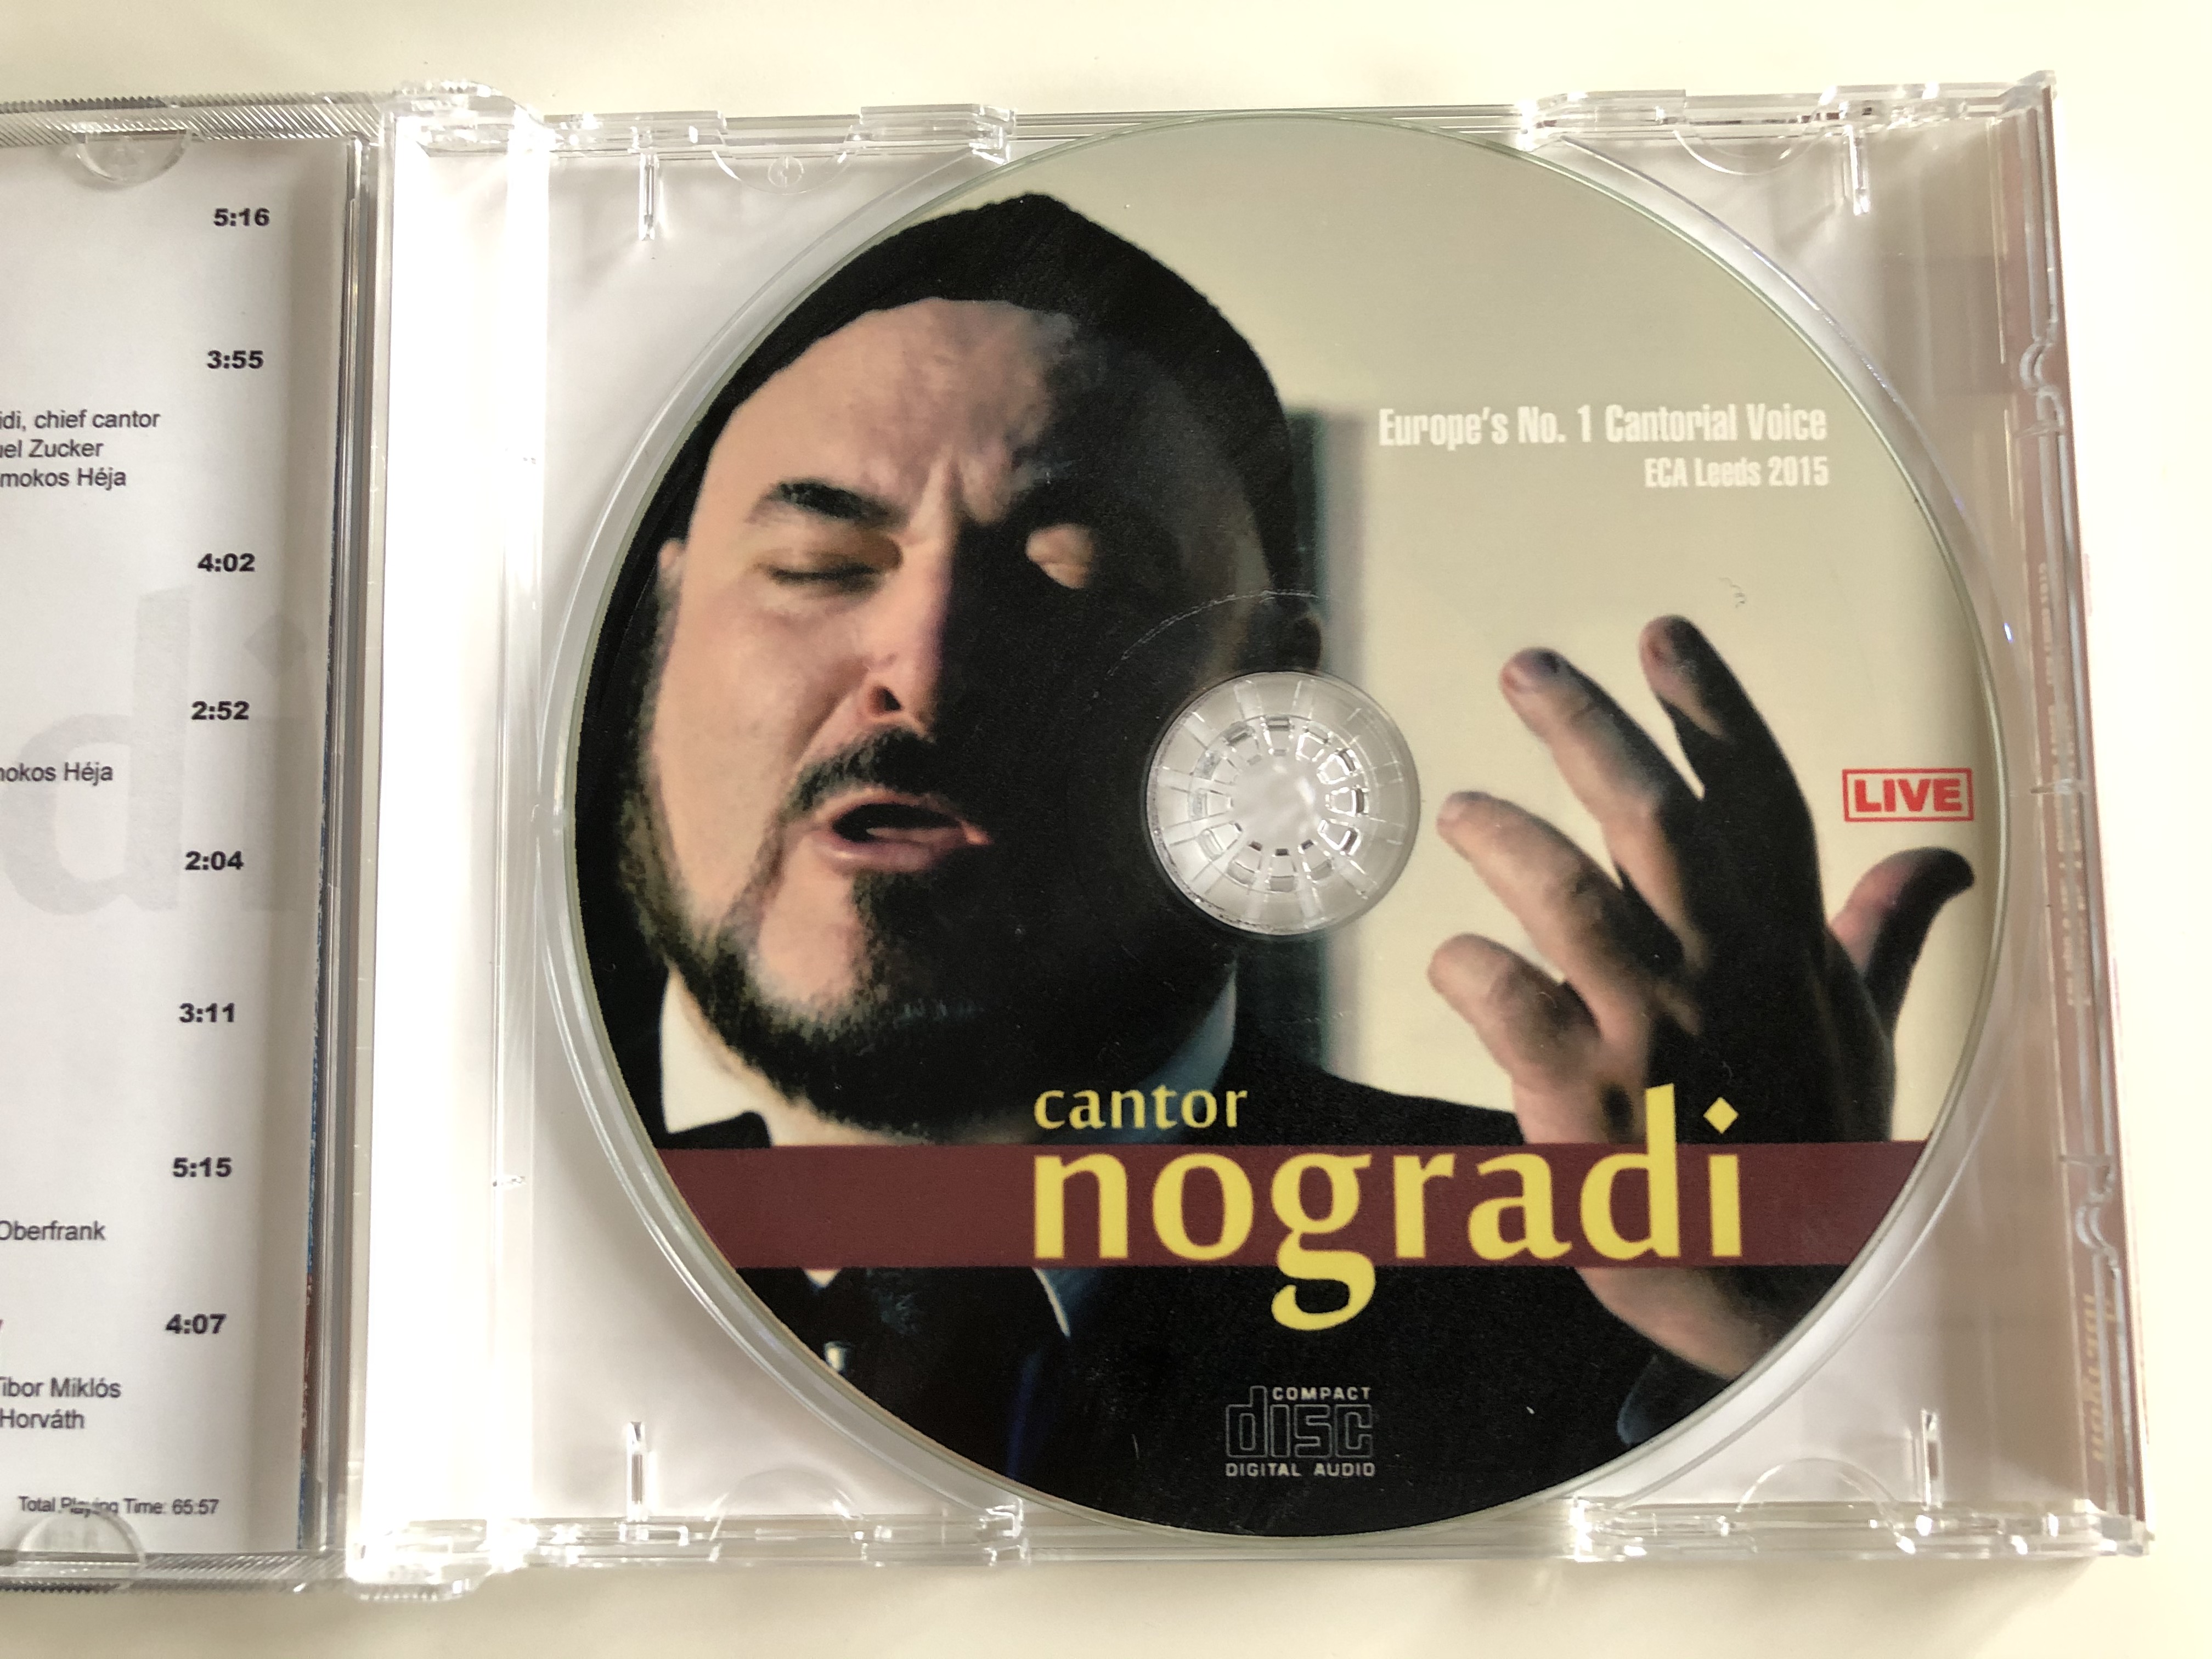 centor-nogradi-europe-s-no.-1-cantorai-voice-eca-leeds-2015-live-audio-cd-2015-5-.jpg